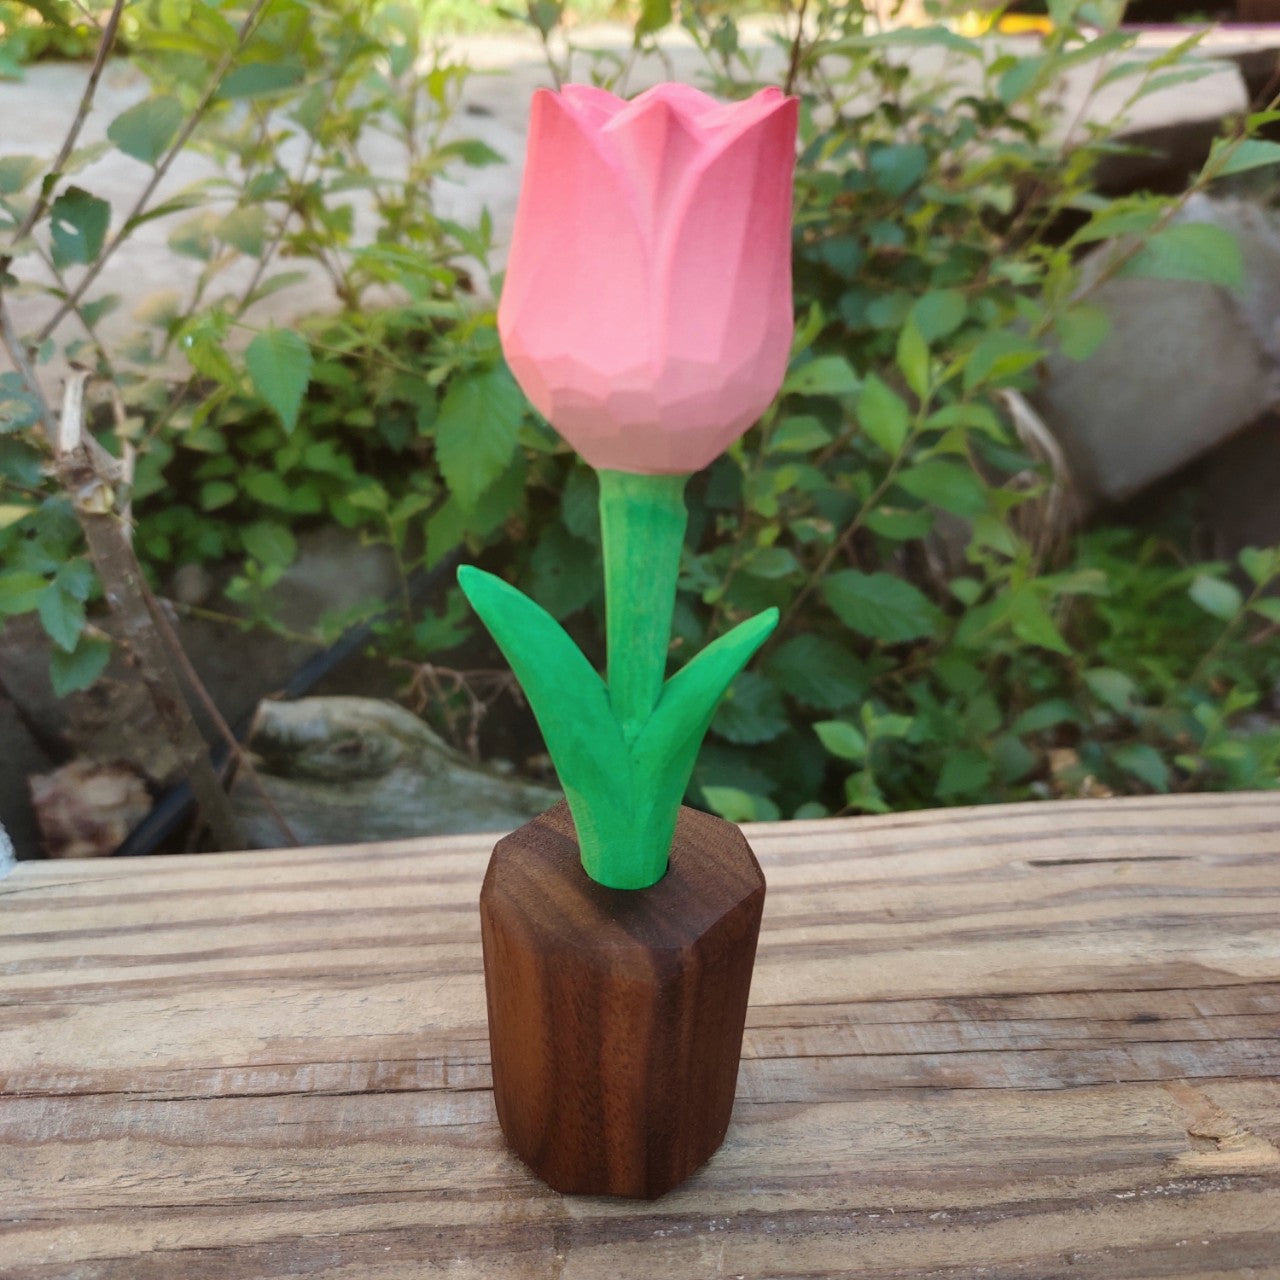 Handmade wooden flowers